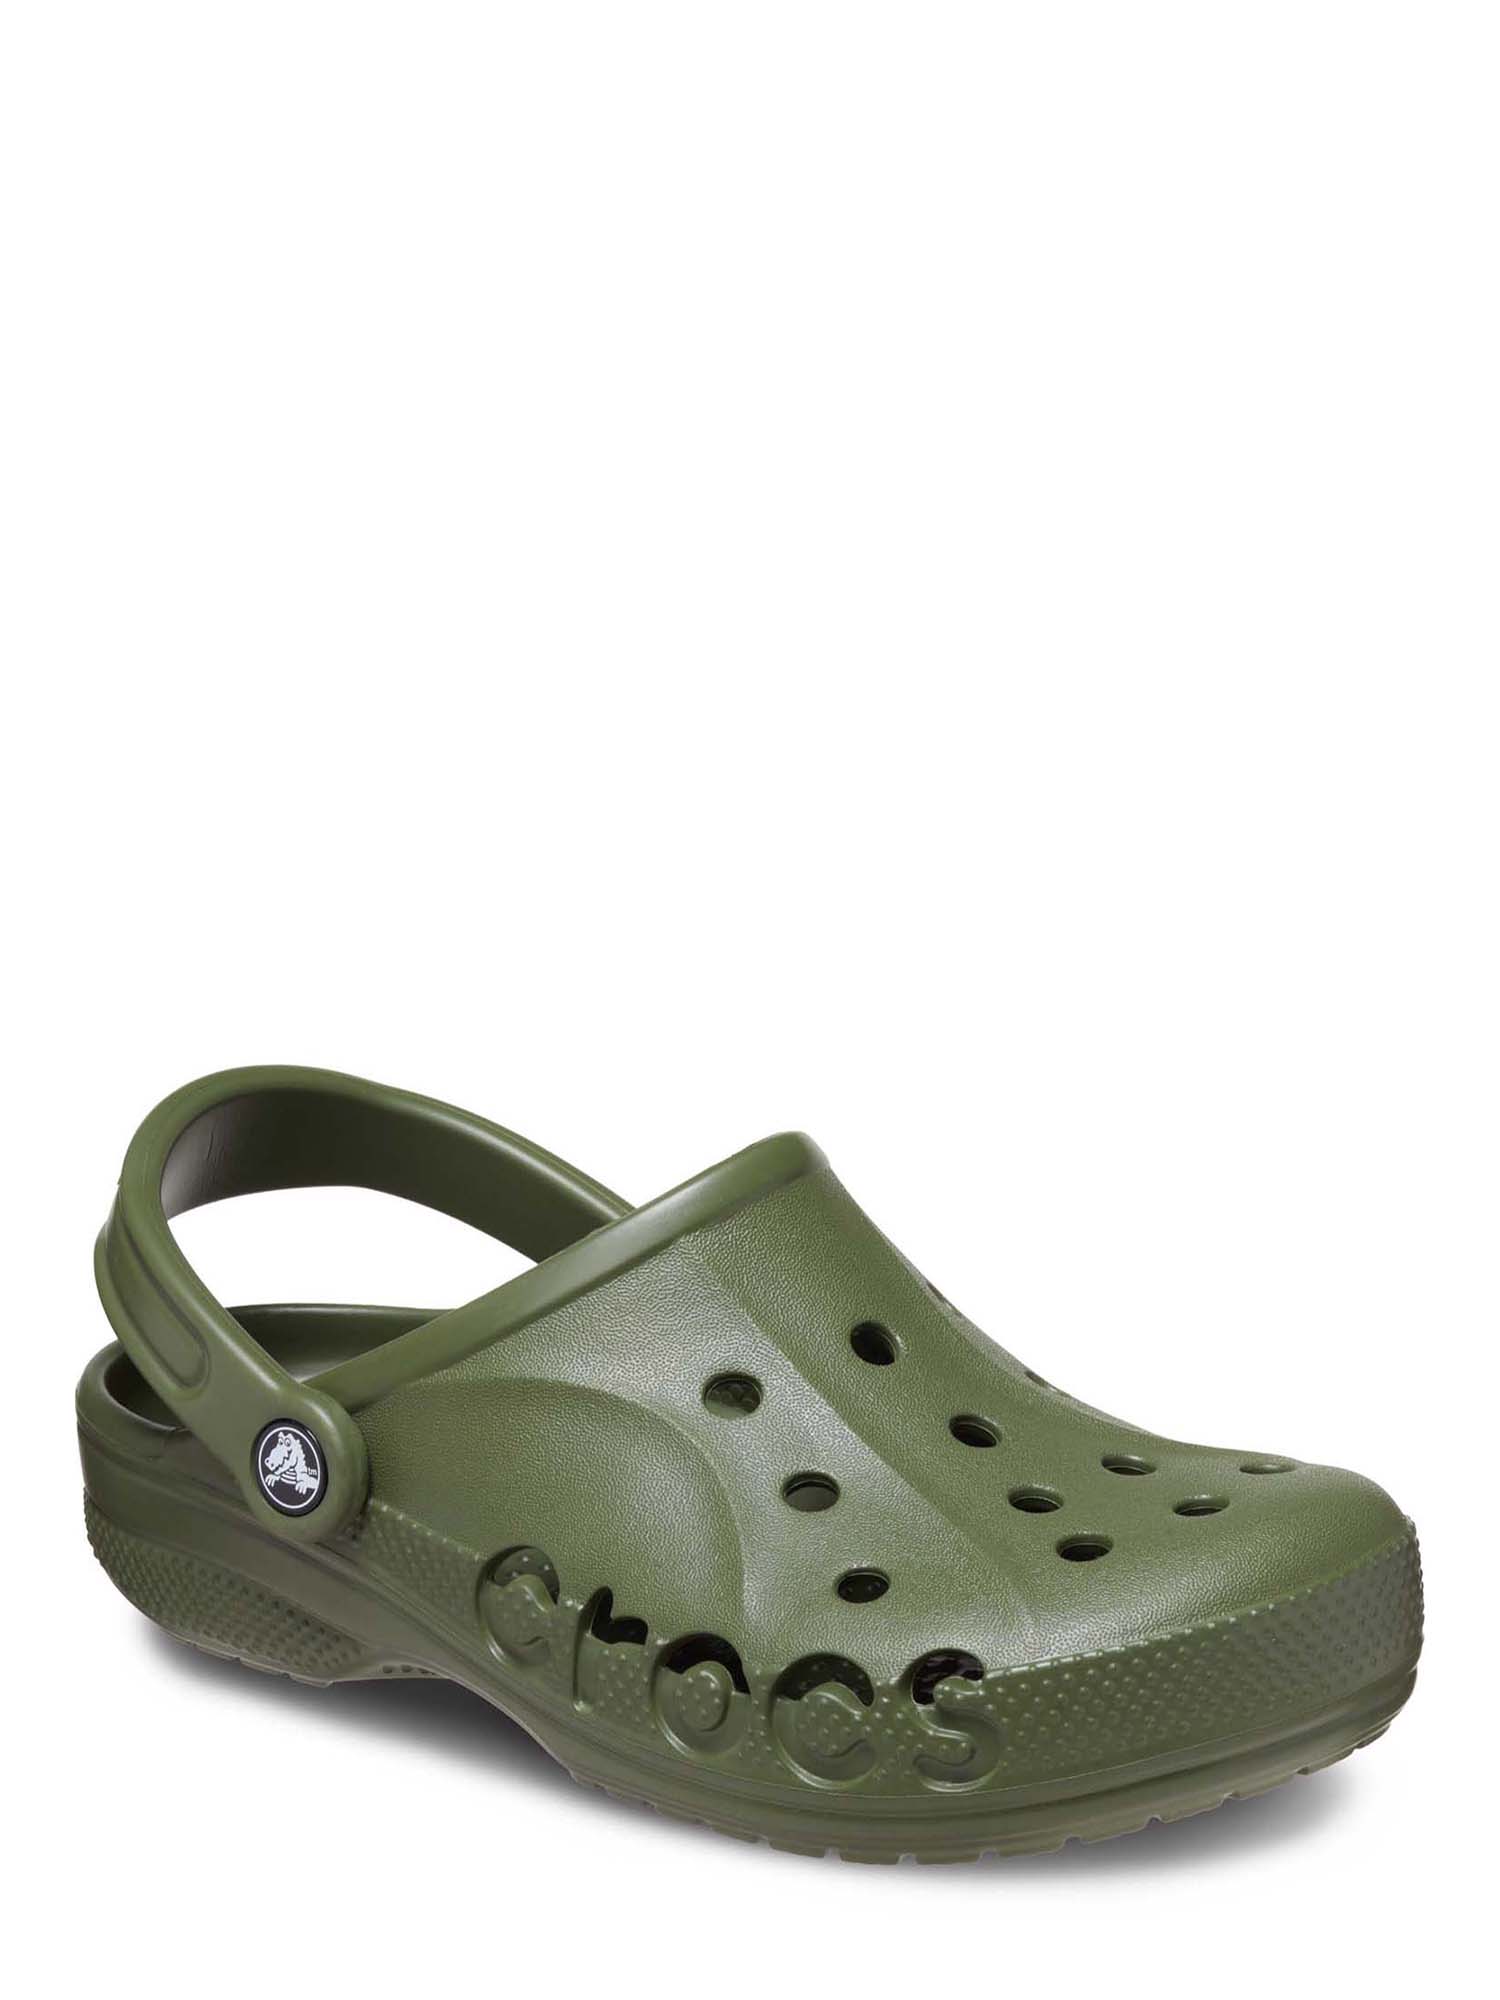 Crocs Men's and Women's Unisex Baya Clog Sandals - image 1 of 7